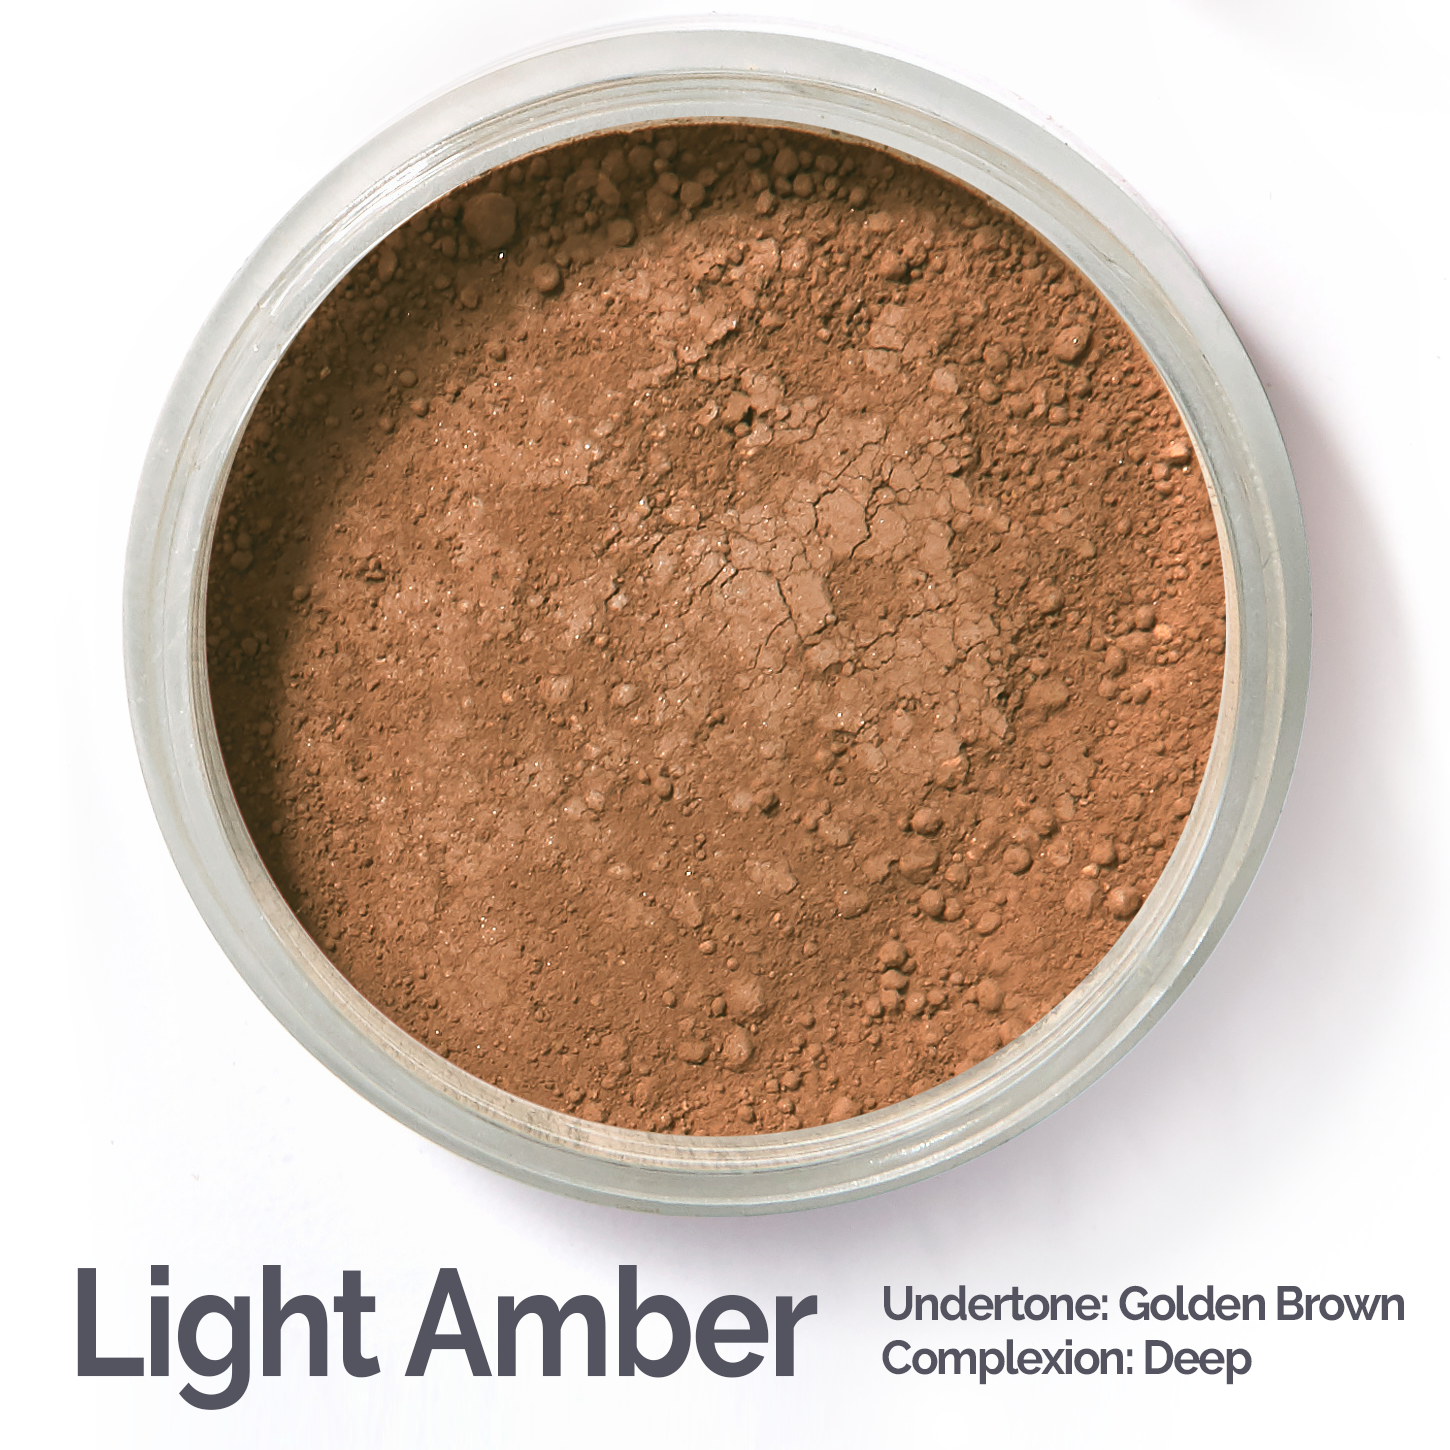 Second to darkest shade #light-amber